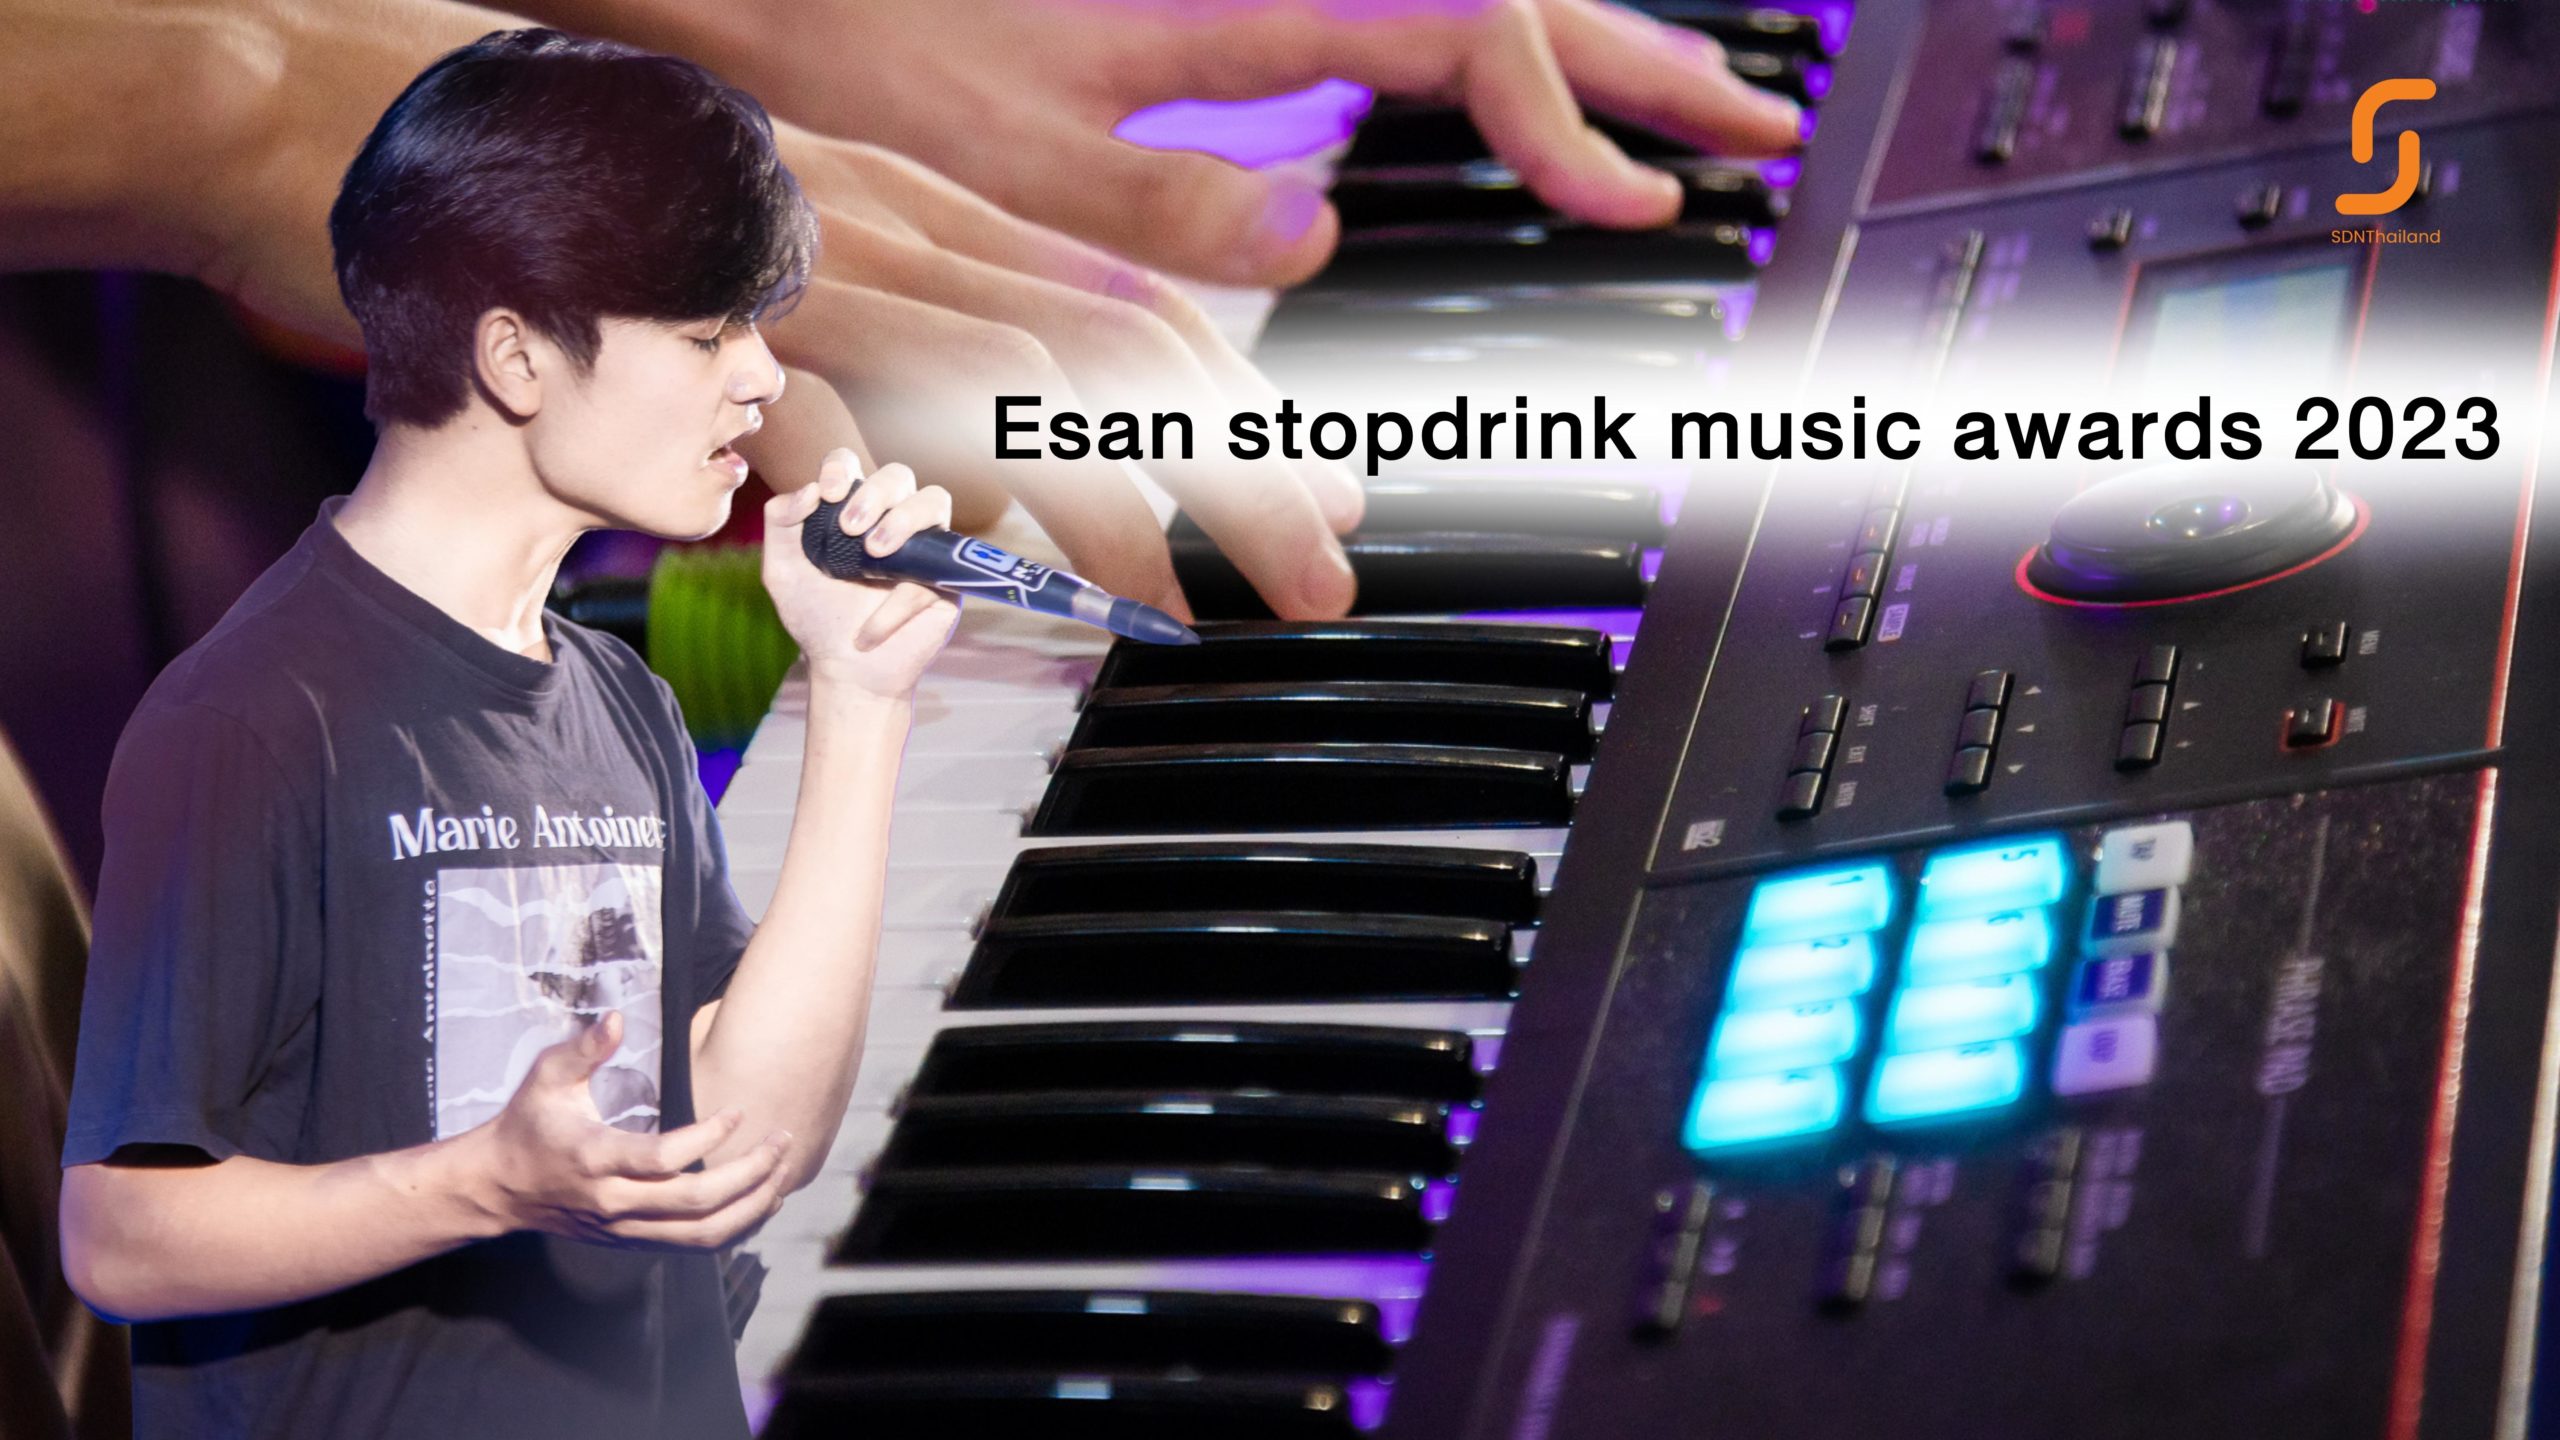 Esan stopdrink music awards 2023